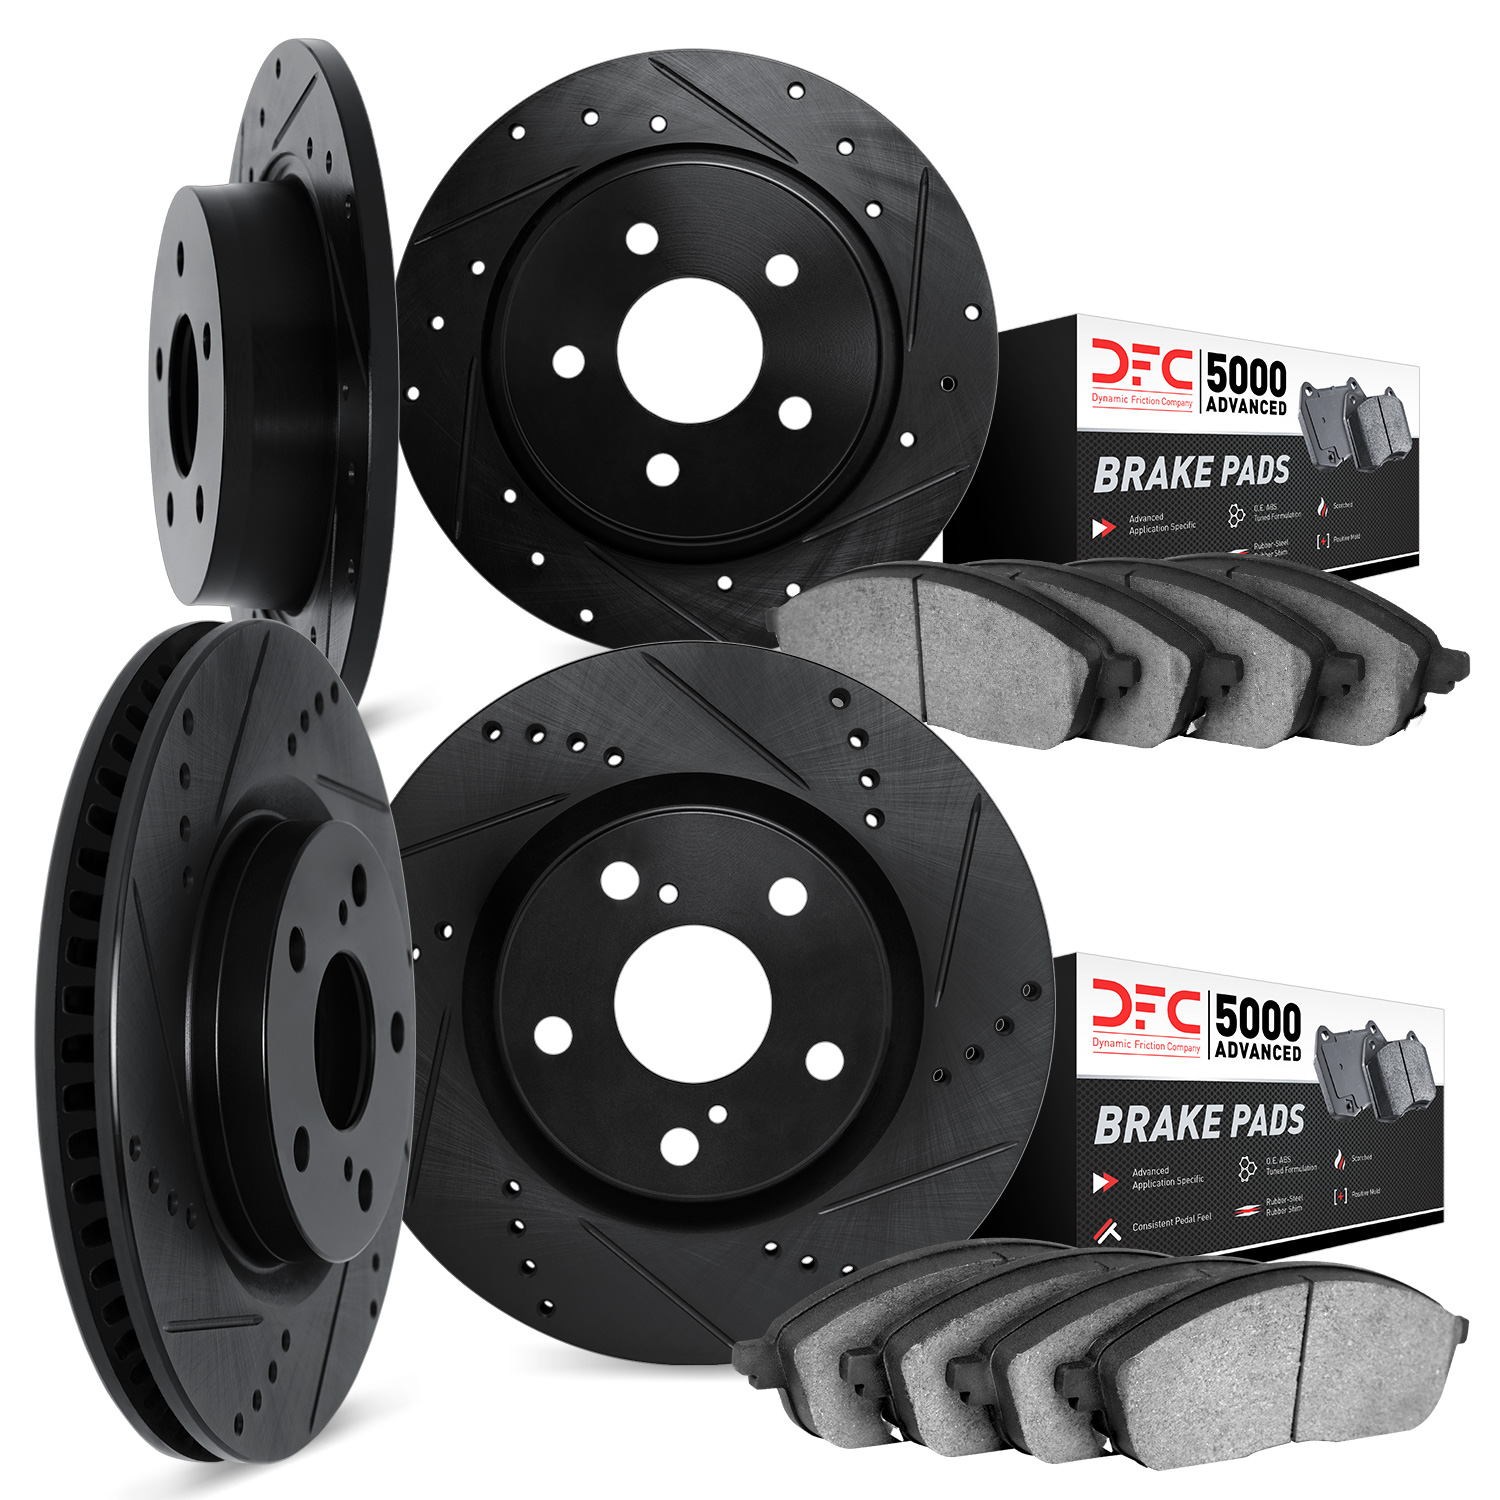 8504-55017 Drilled/Slotted Brake Rotors w/5000 Advanced Brake Pads Kit [Black], 2015-2020 Ford/Lincoln/Mercury/Mazda, Position: